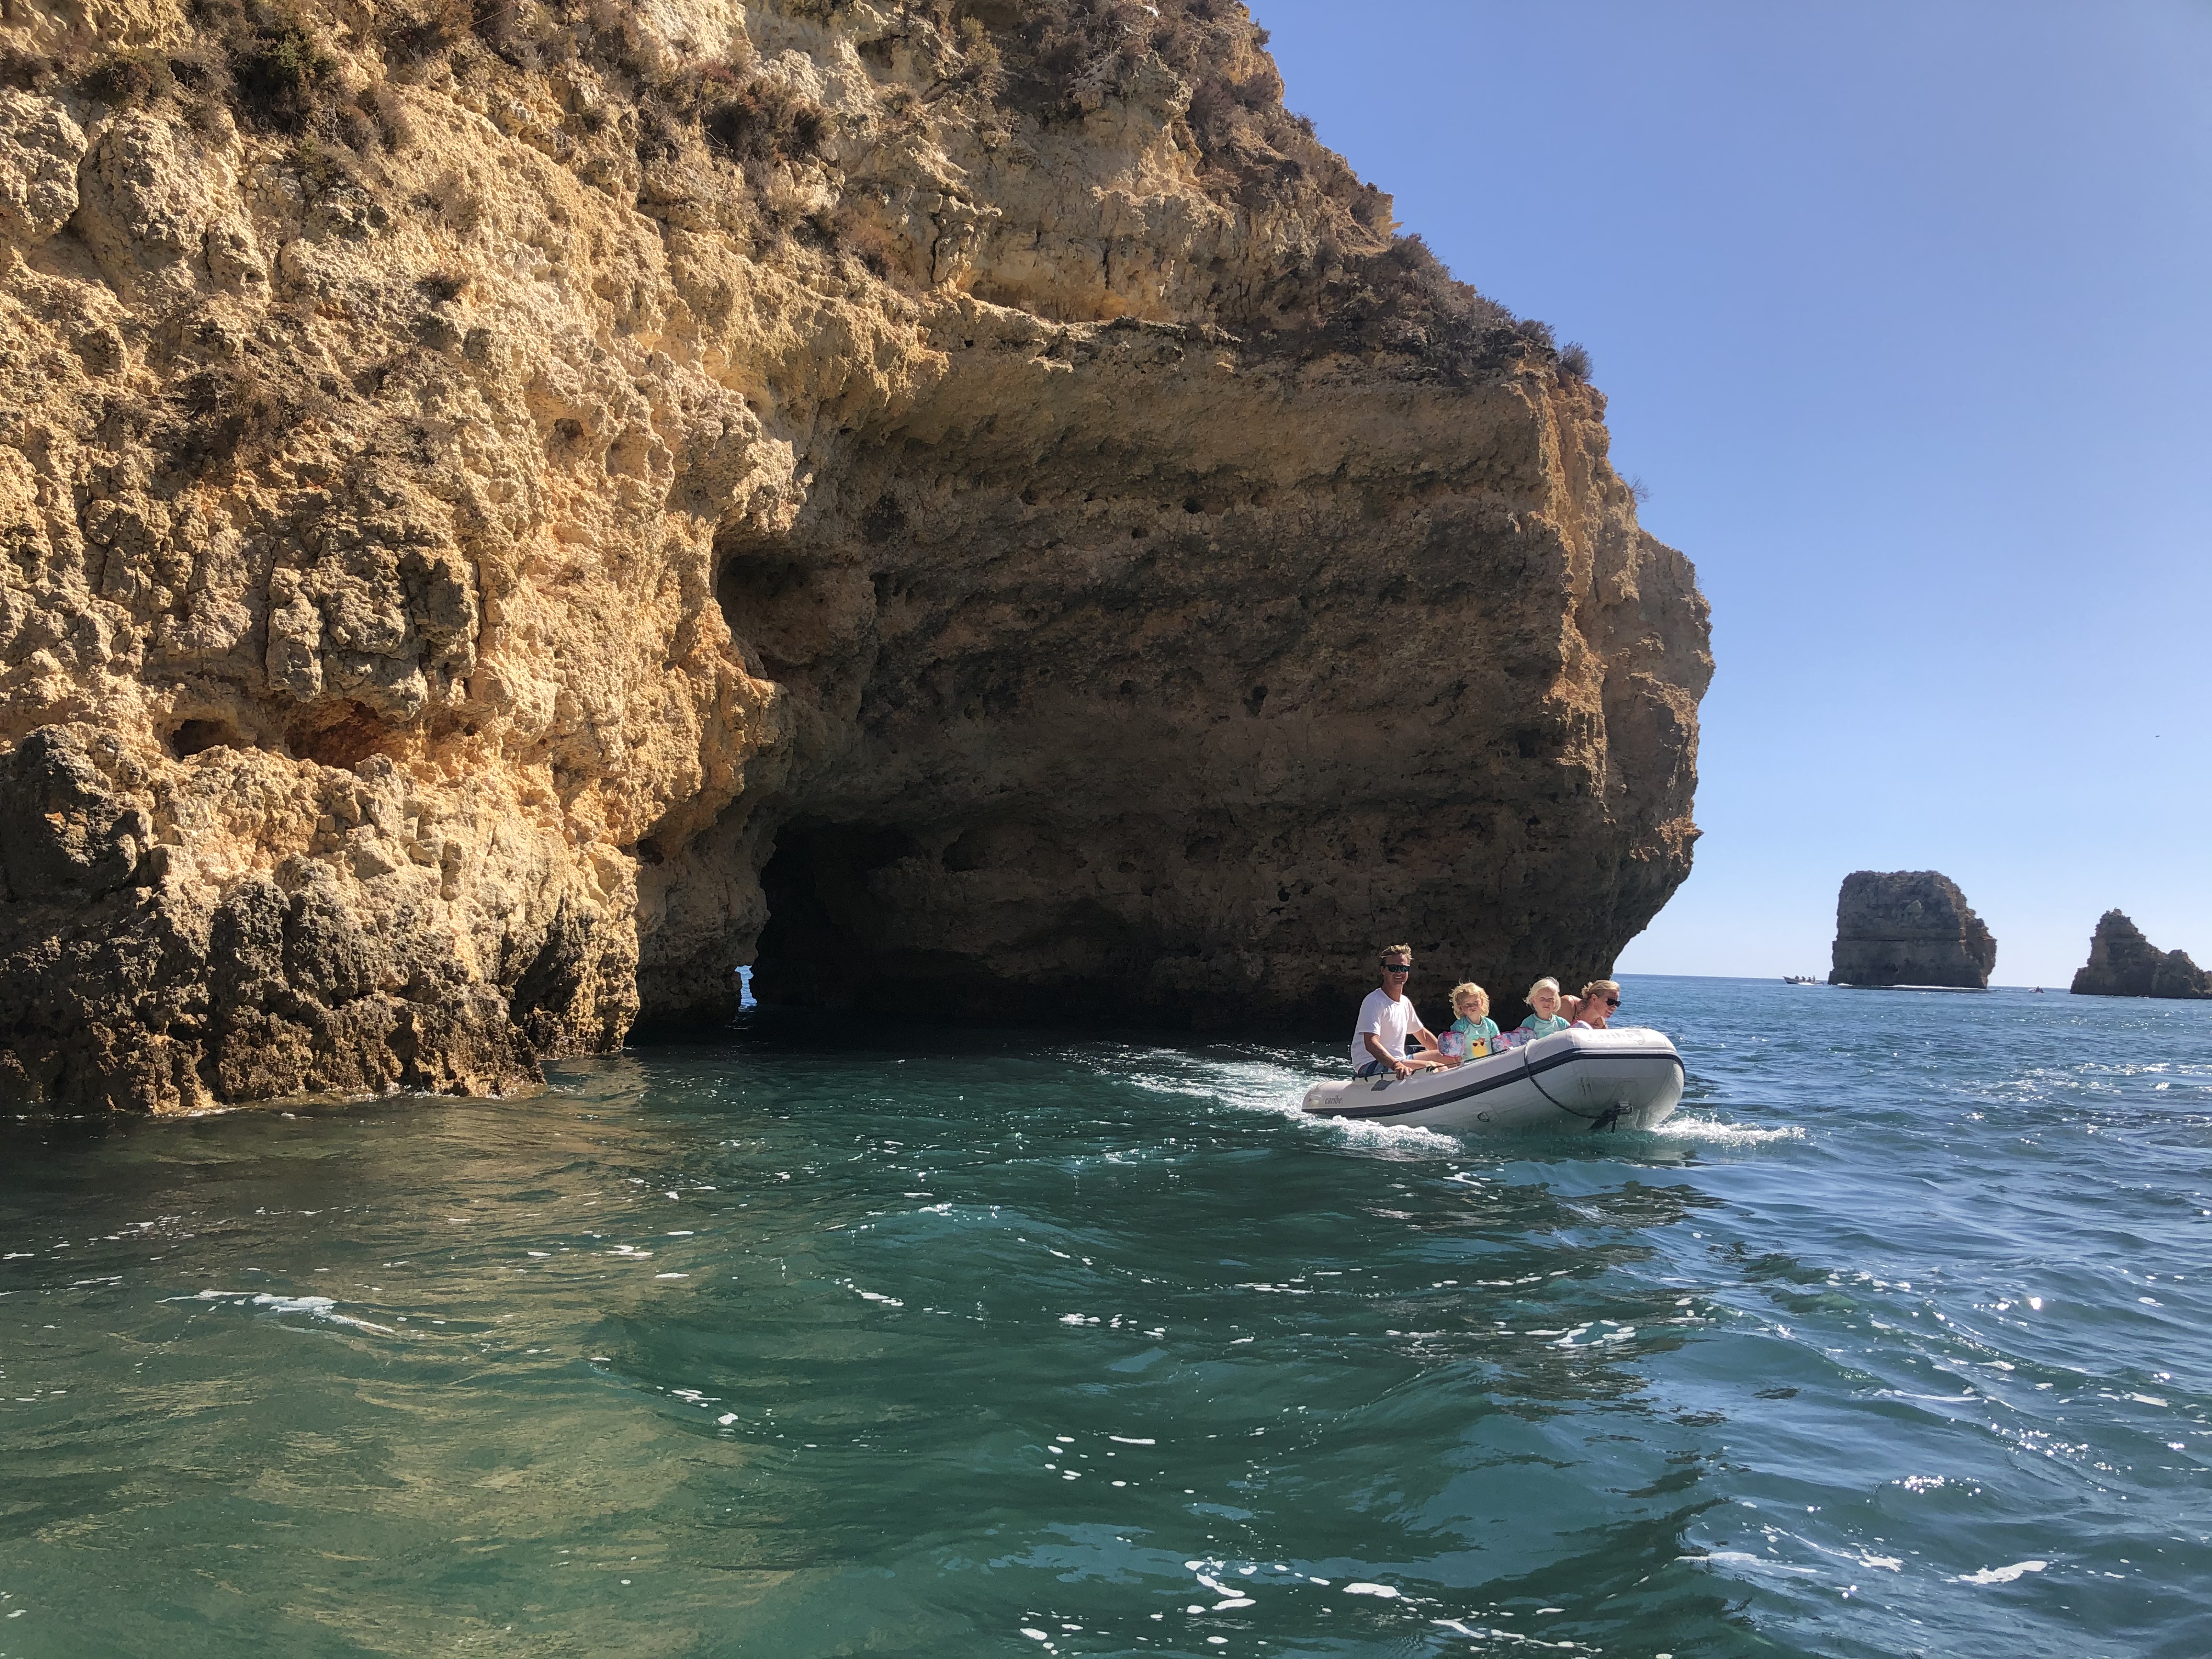 Zeilen varen vertrekken wereld rond reizen boot keven portugal lissabon anker bezoeken vrienden zwemmen lagos grotten